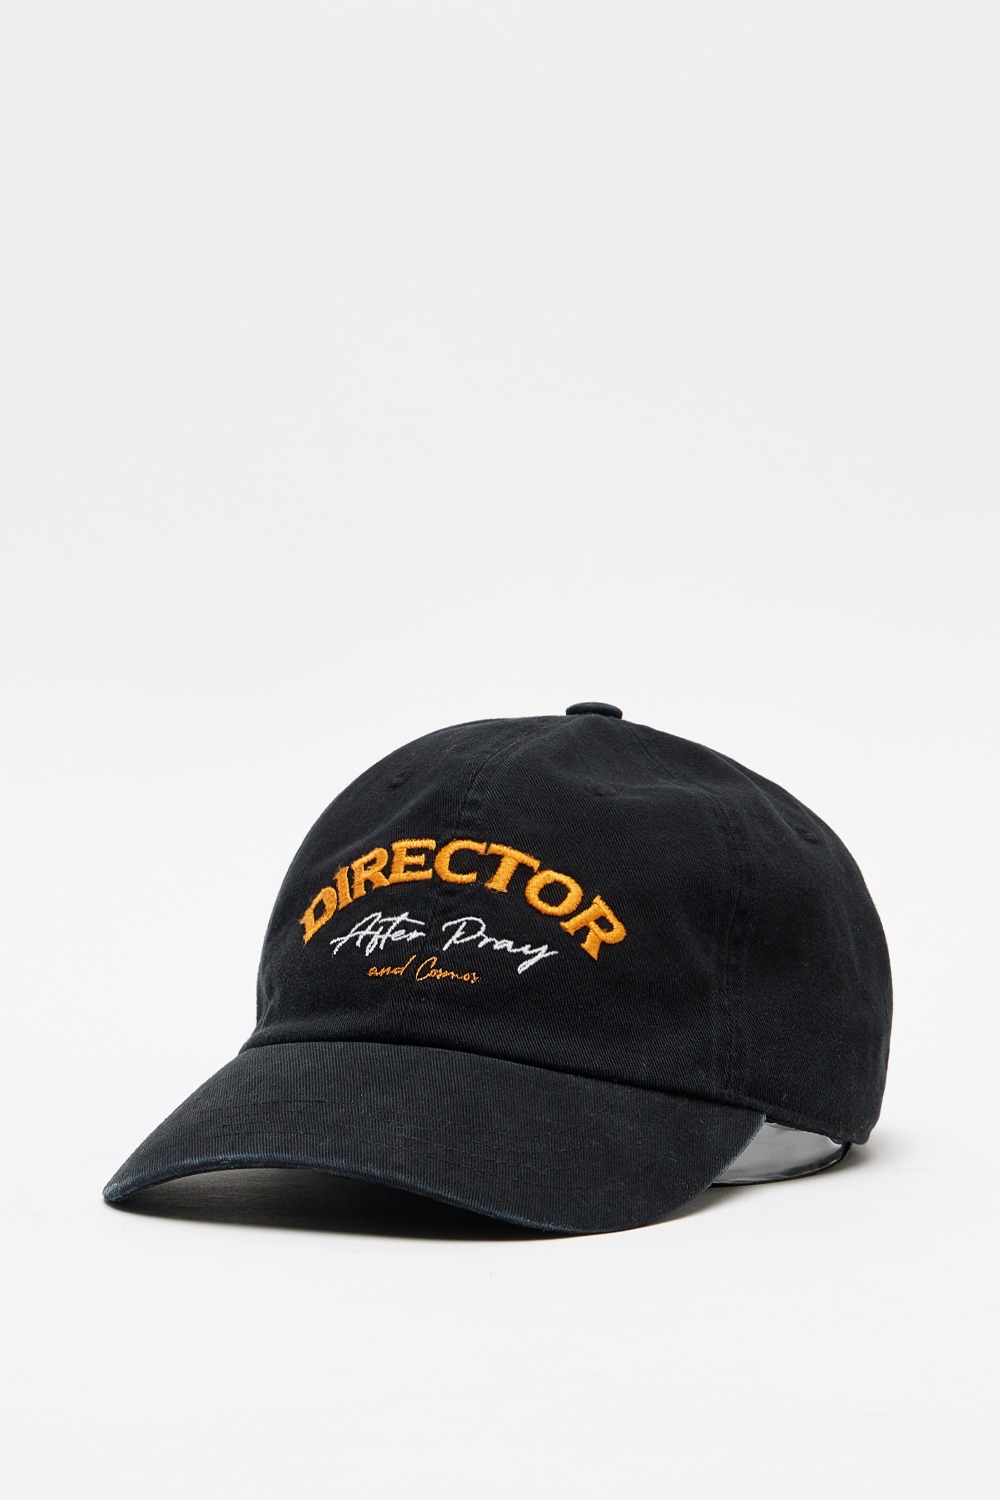 Presence Director Ball Cap - Black